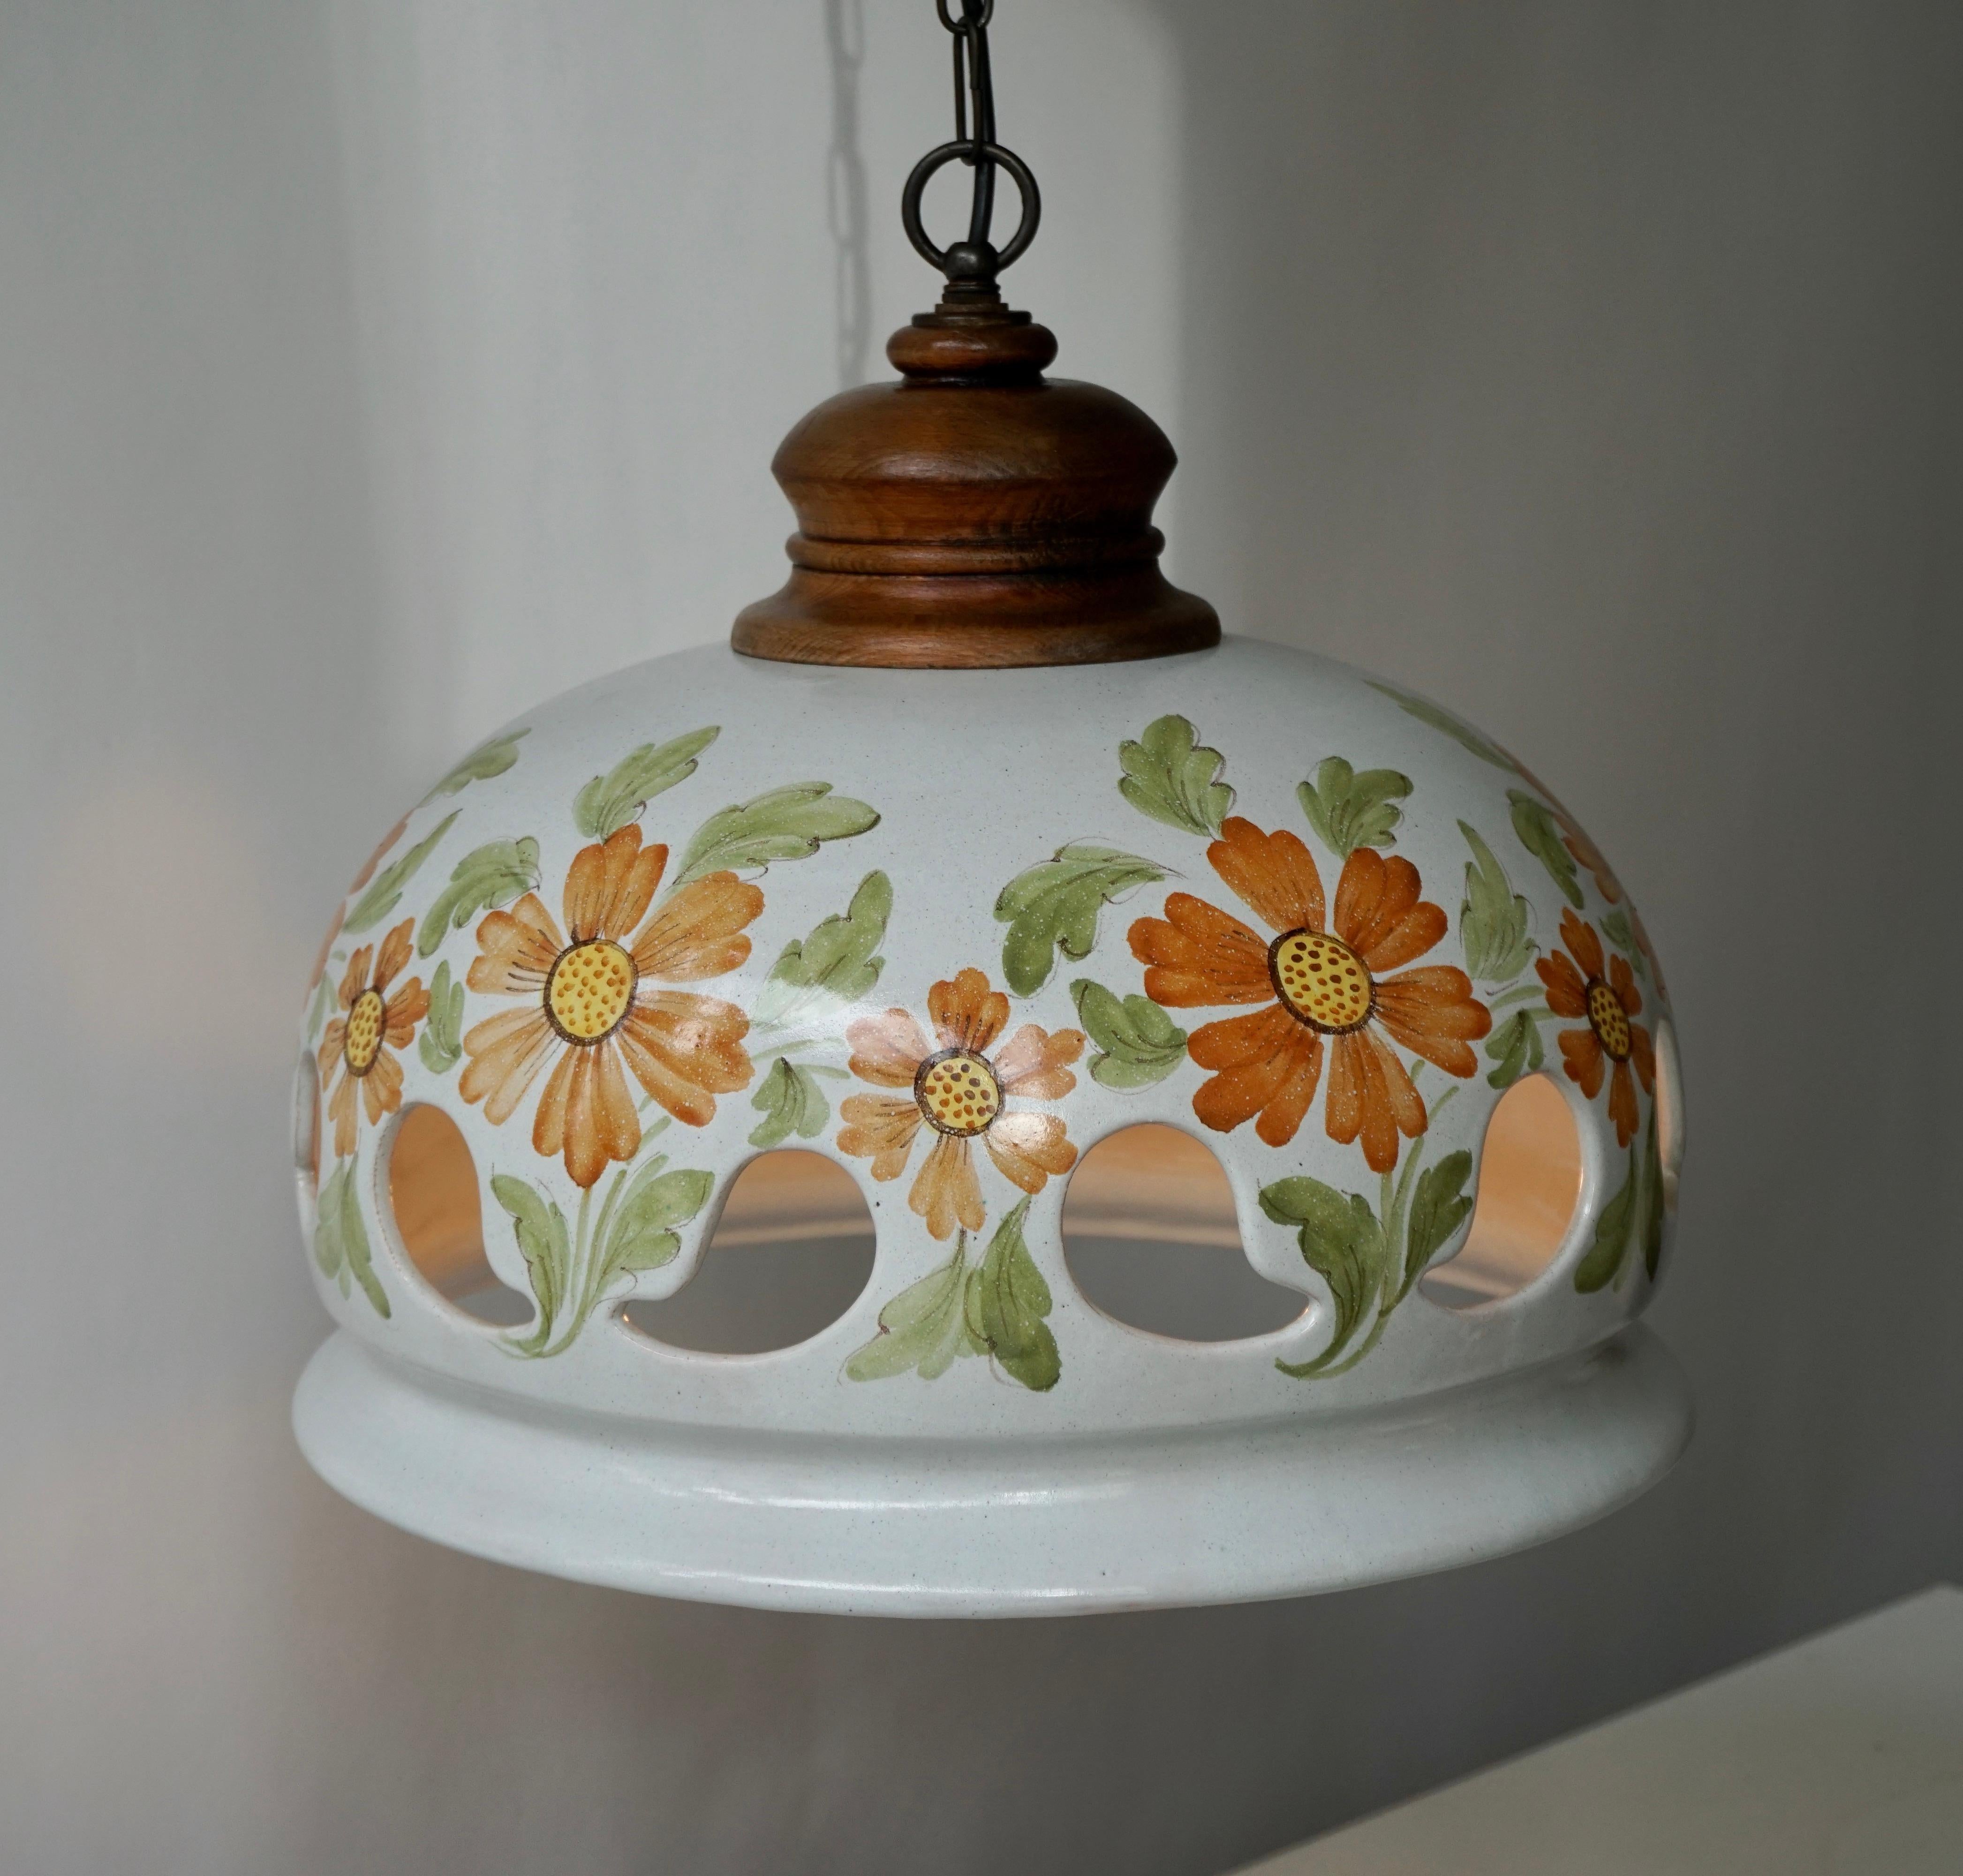 Italian ceramic table lamp.
Flower decoration with white ceramic glaze. 
Original electrical system.

Measures: Diameter 40 cm.
Height fixture 35 cm.
Total height 120 cm.